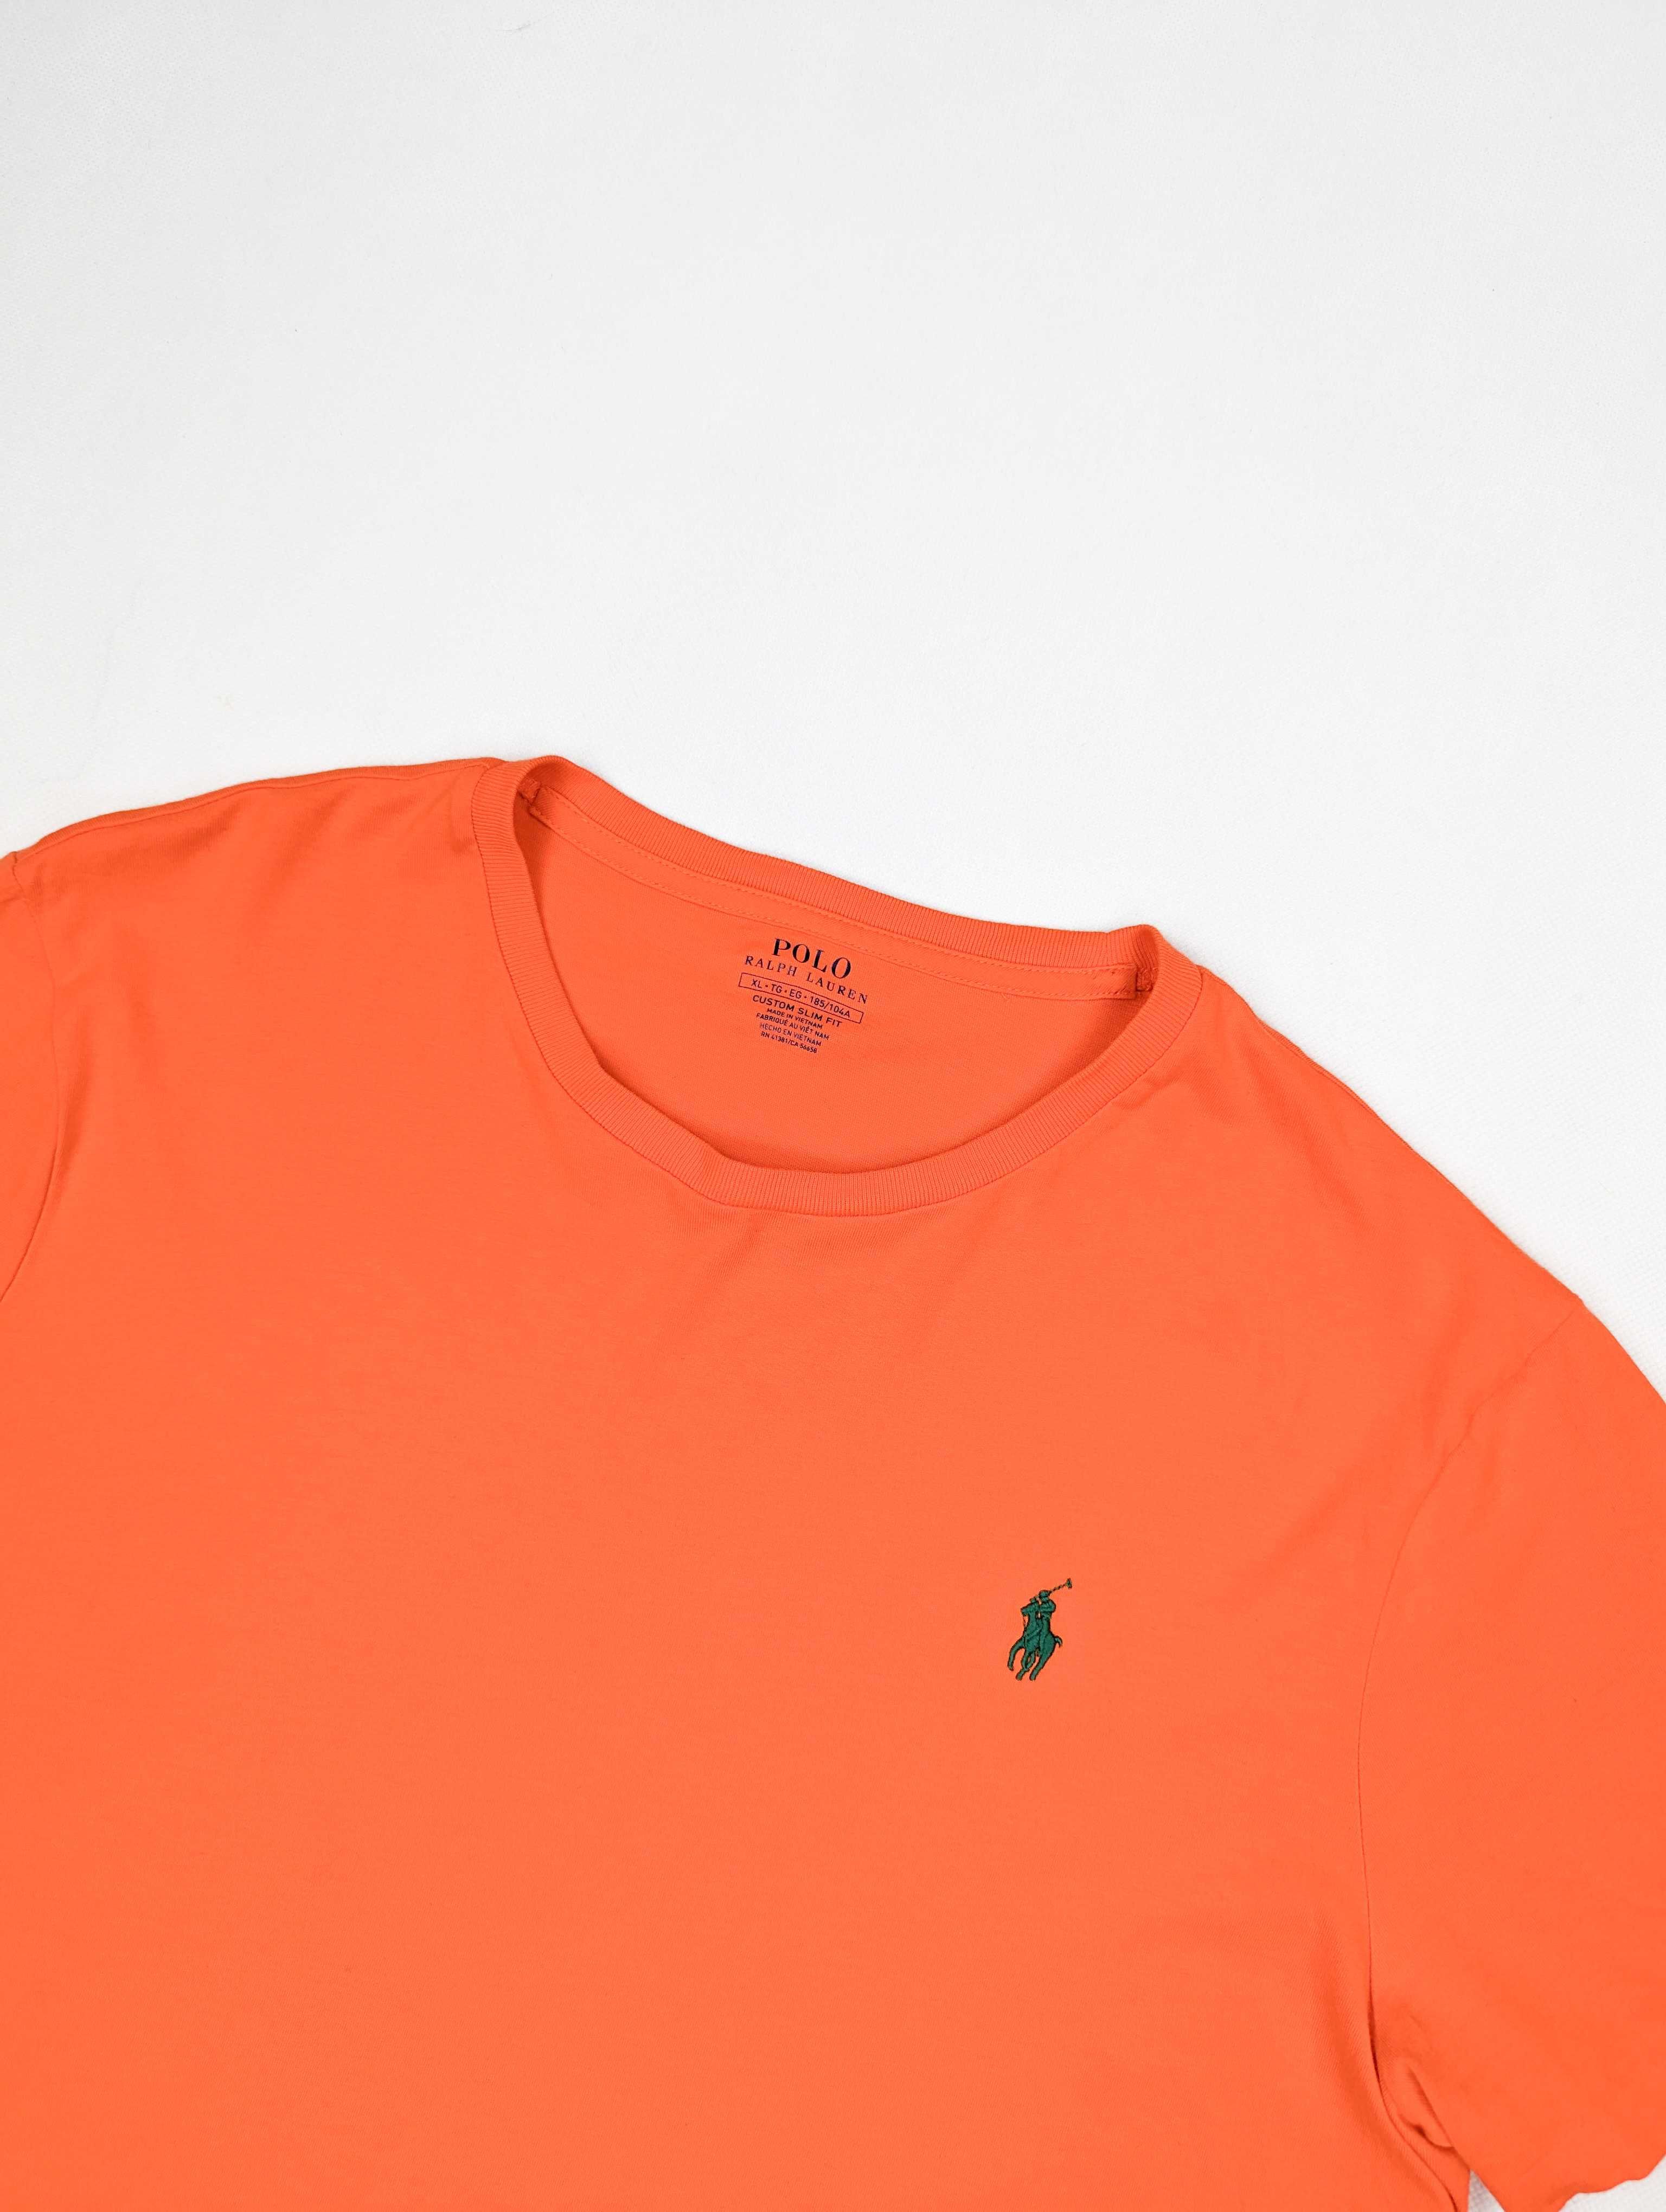 Polo Ralph Lauren pomarańczowa koszulka t-shirt XL logo